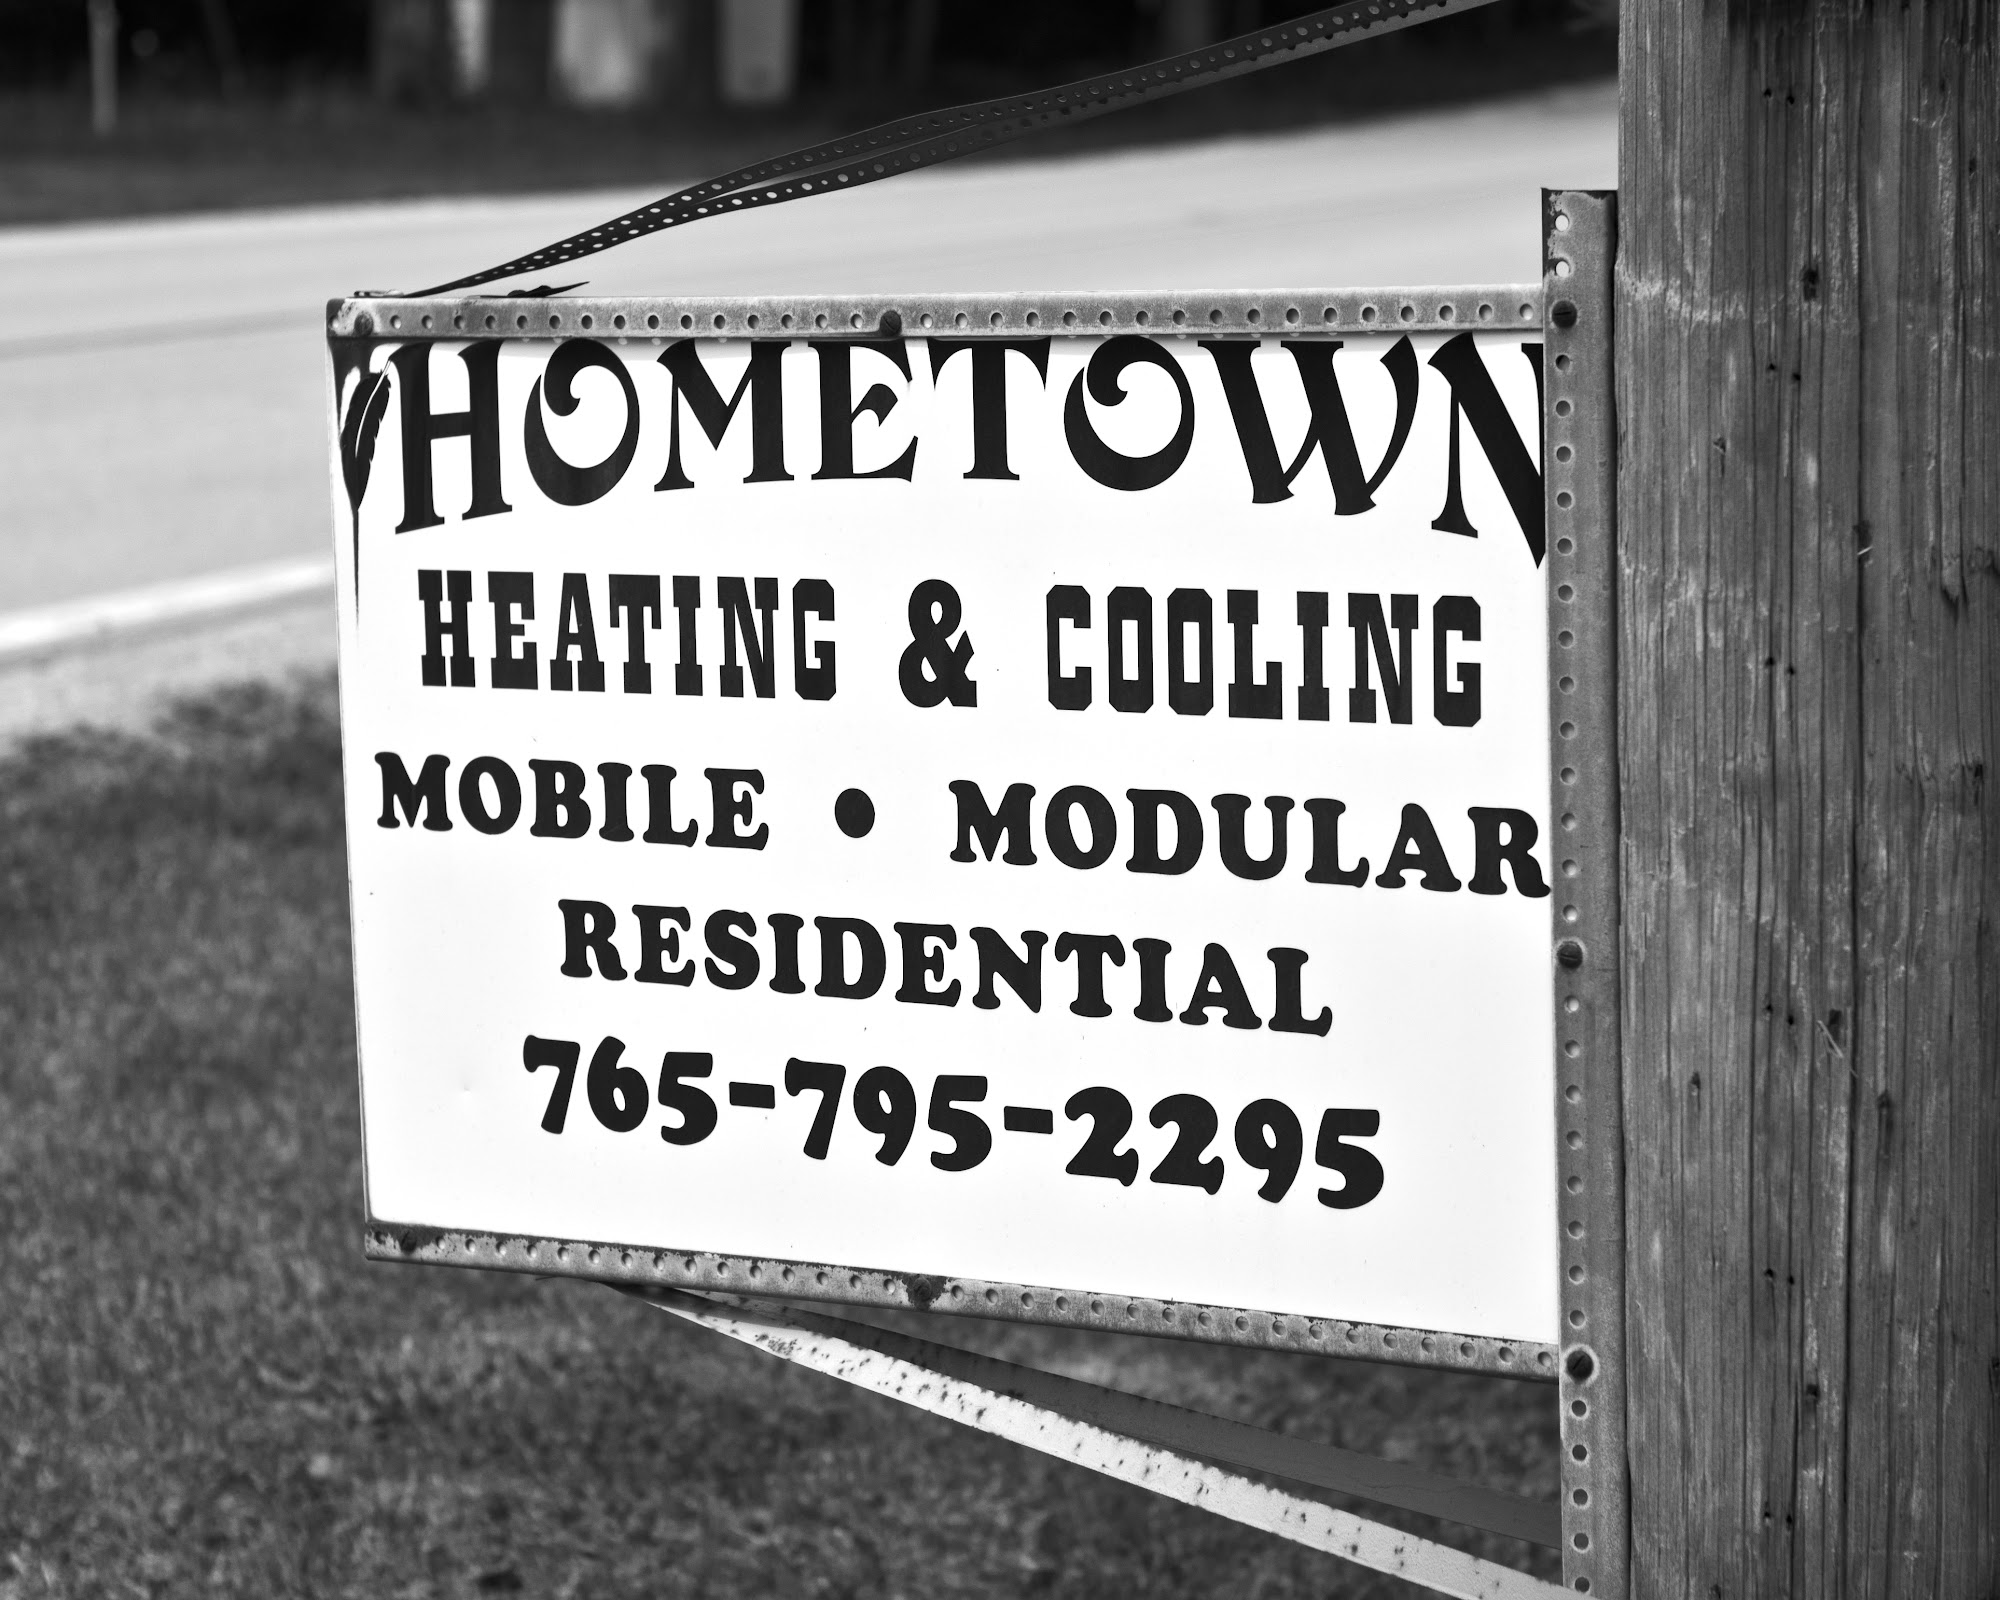 Voelker's Hometown Heating 9781 IN-243, Cloverdale Indiana 46120